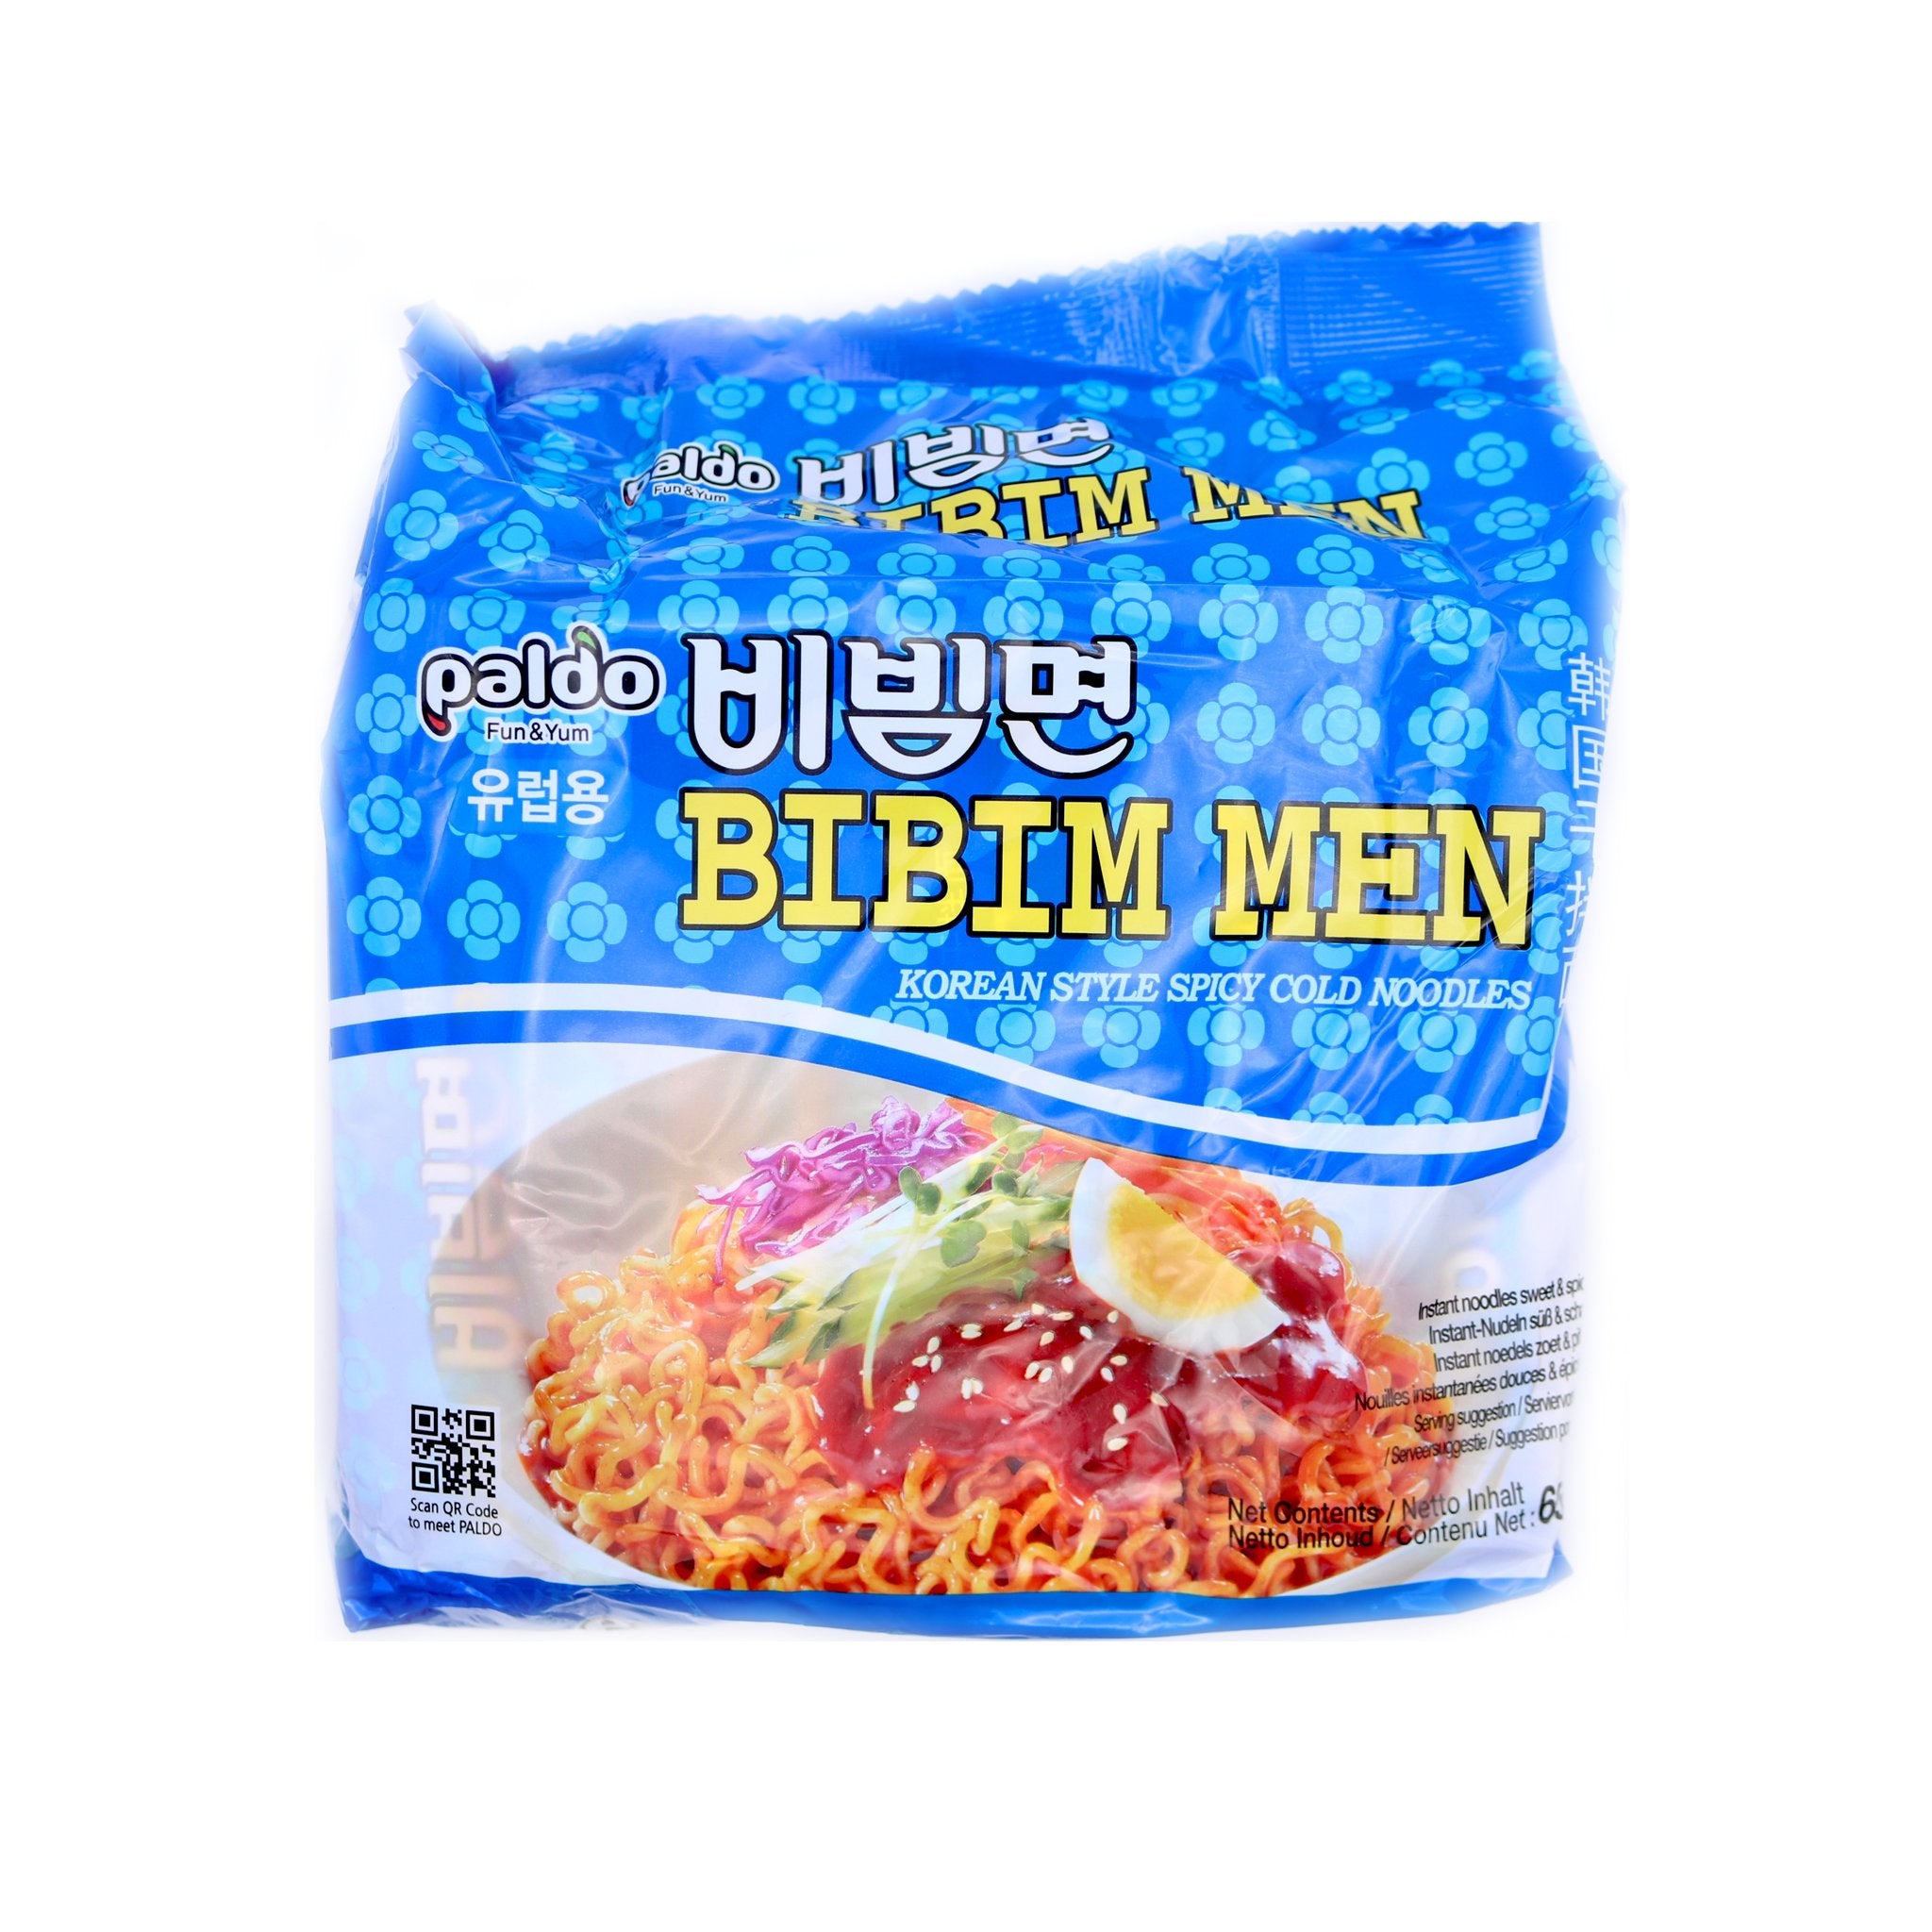 Bibimmen Korean Style Spicy Cold Instant Noodles Multipack 650g by Paldo